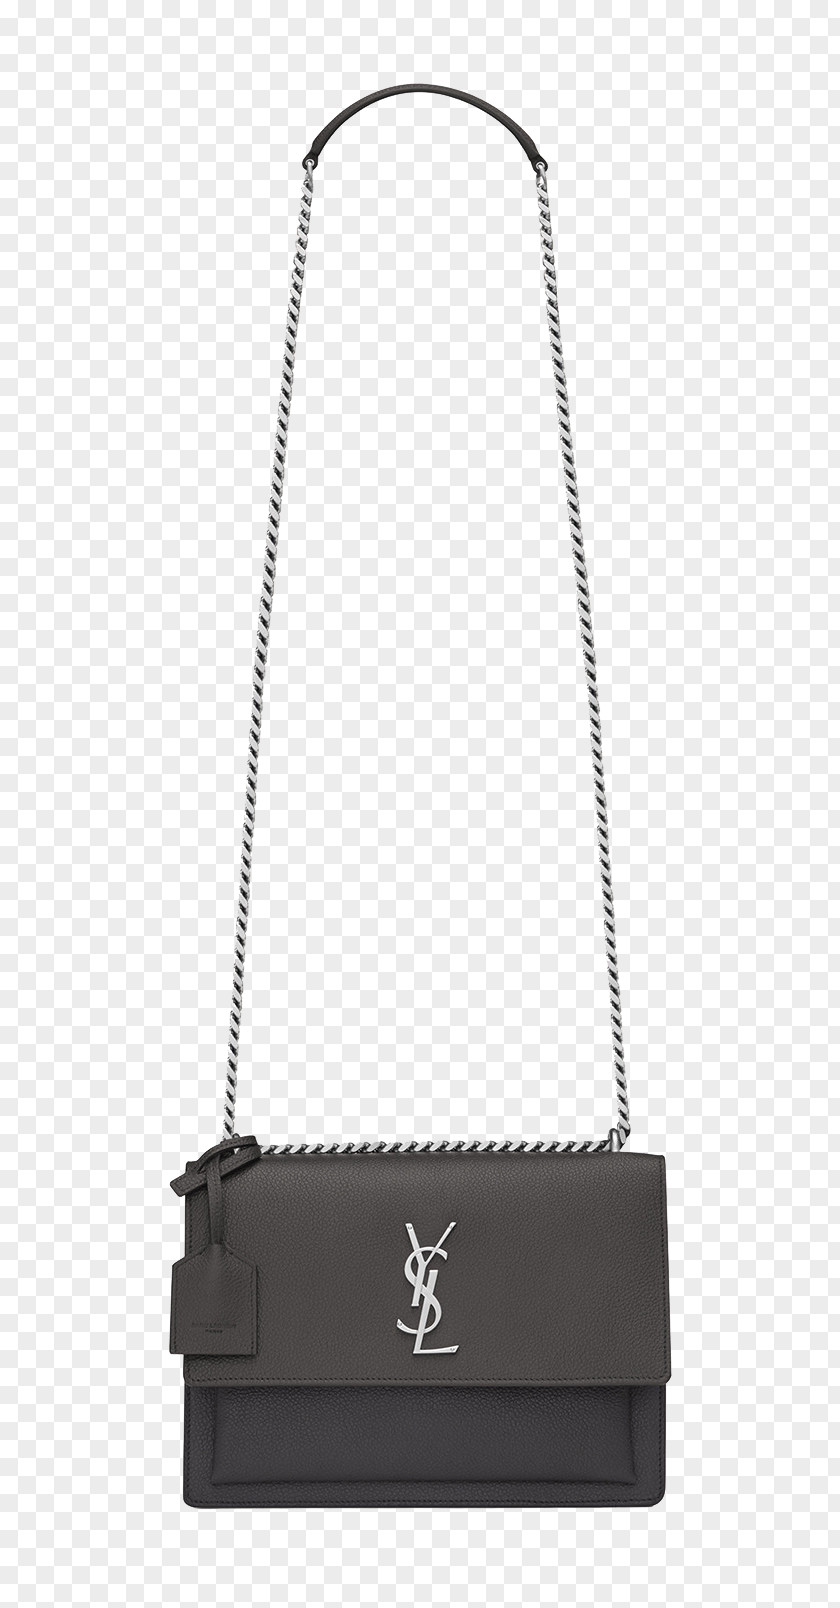 SaintLaurent Chain Bag Handbag White Leather Messenger Pattern PNG